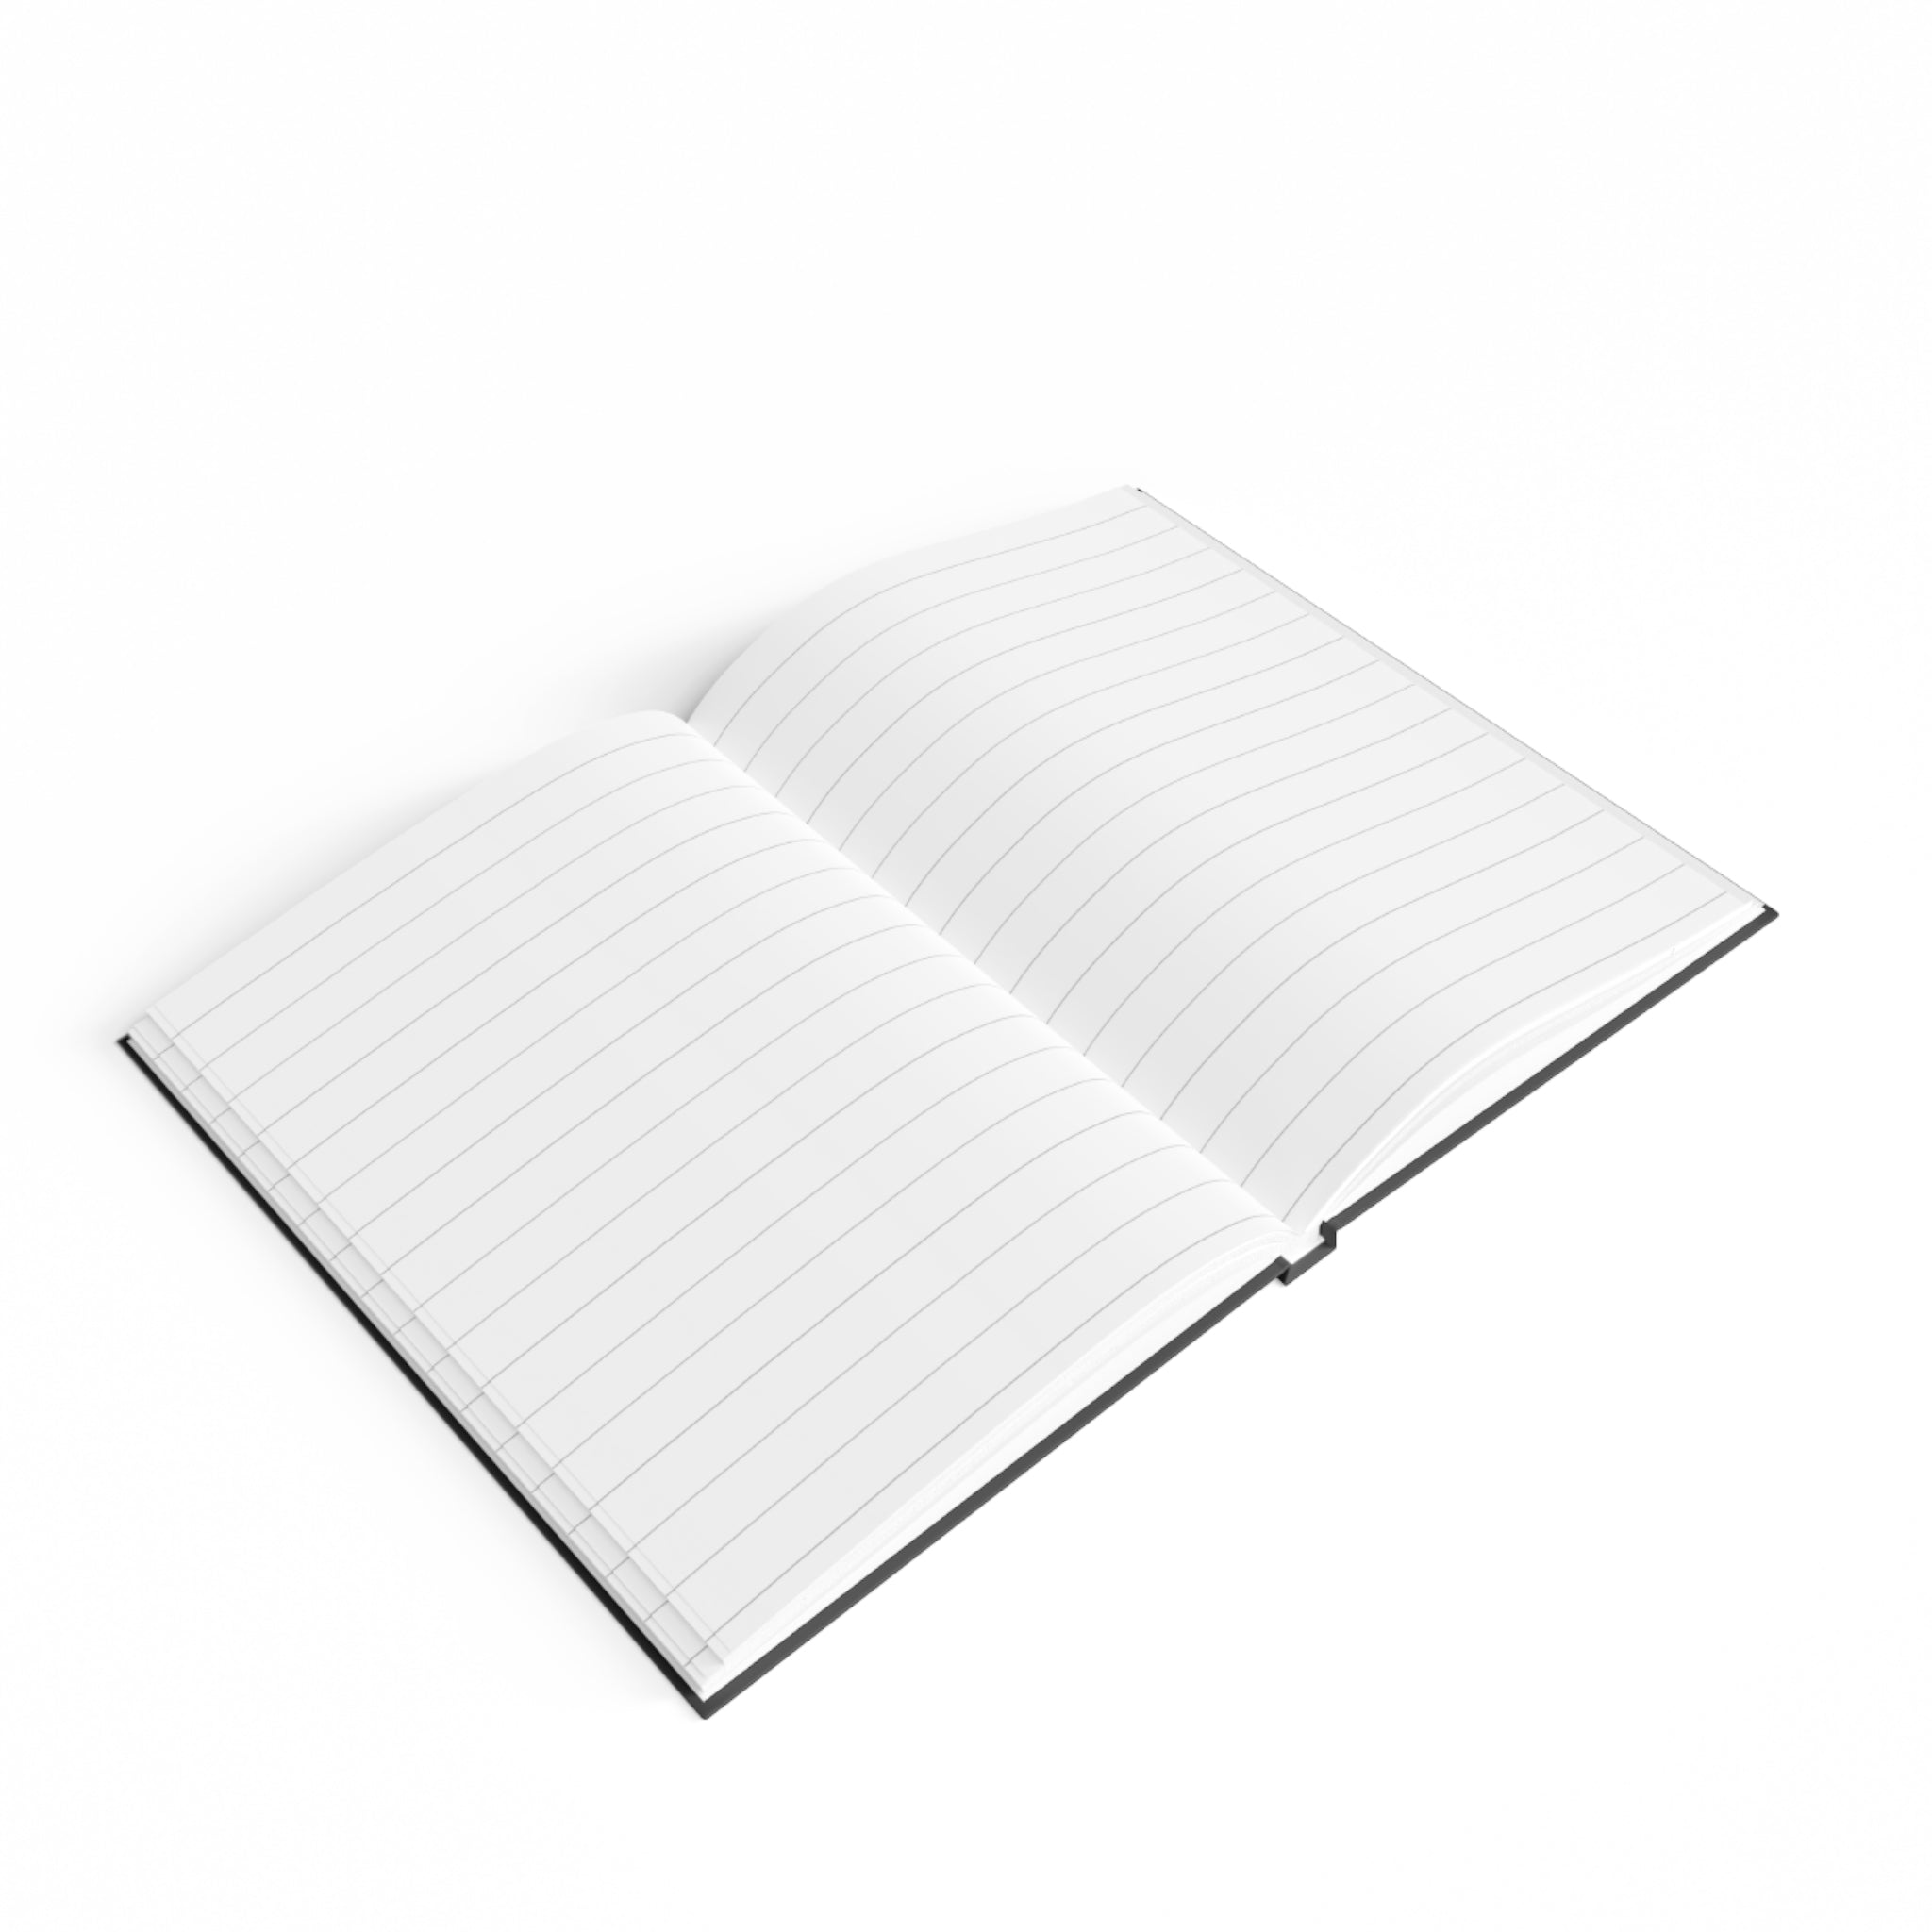 "Brattie" Silhouette Journal - Ruled Line (Black), Lined Notebook, Gratitude Journal